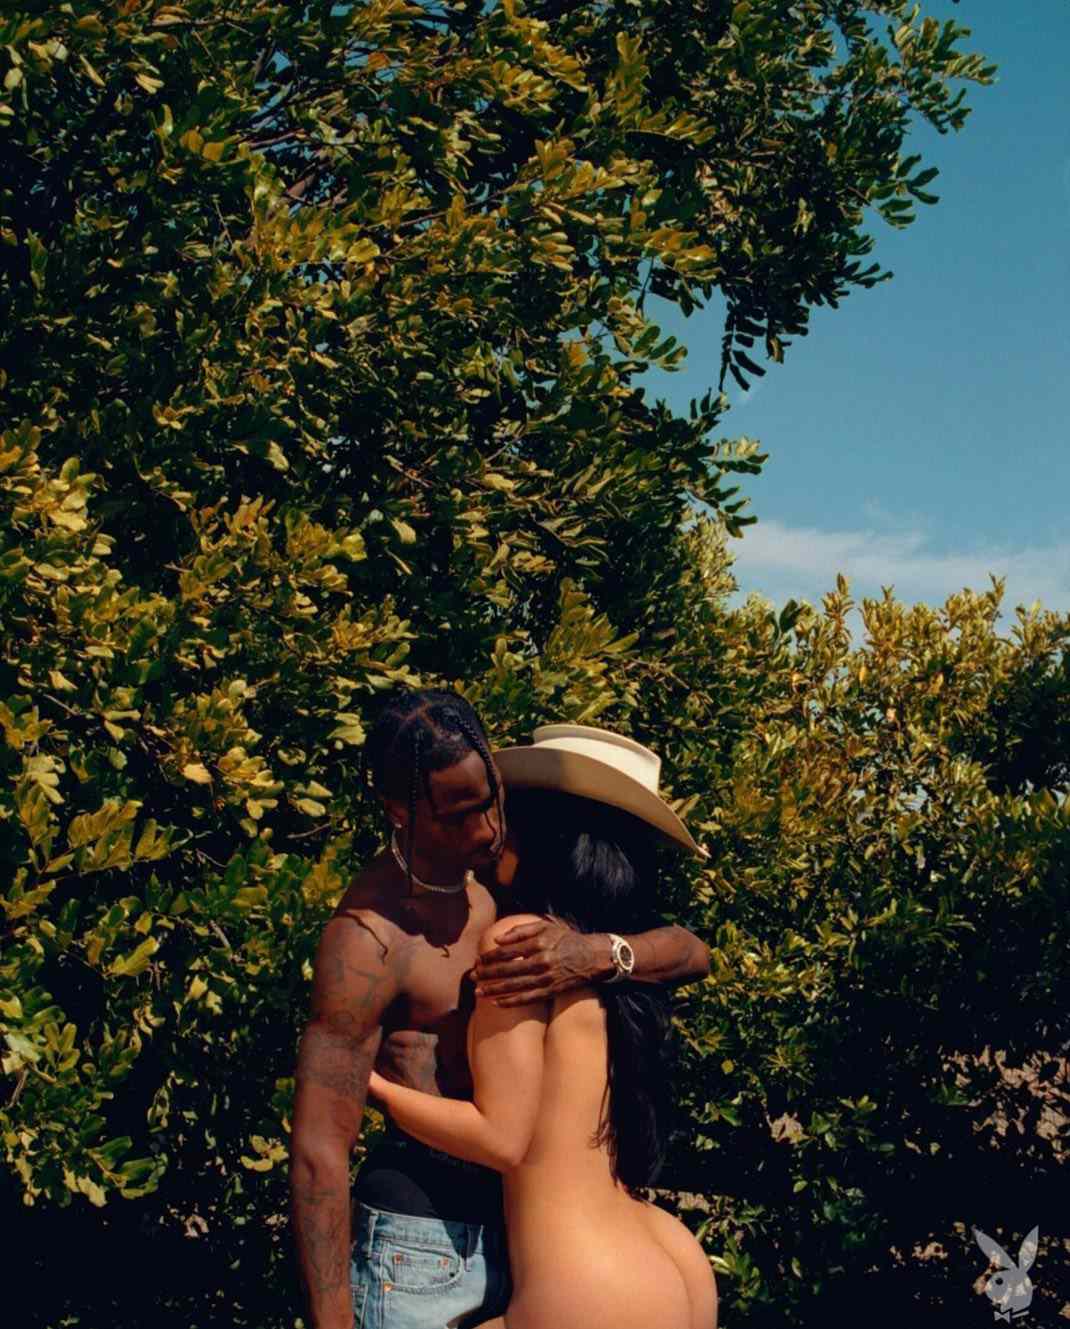 aprajita arora recommends Kylie Jenner Leaked Photos